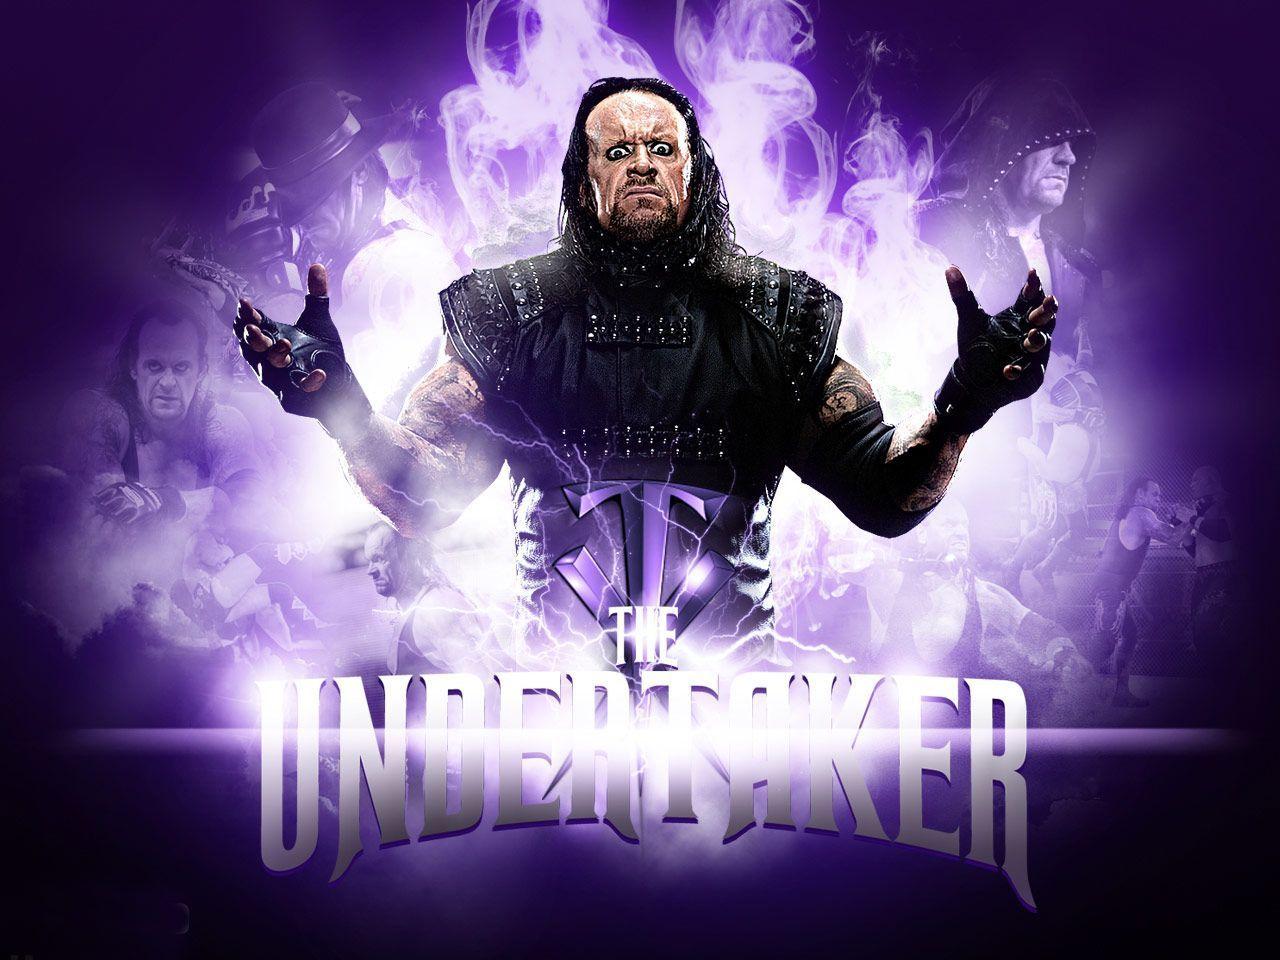 WWE WALLPAPERS: The Undertaker. Undertaker Wallpaper. Undertaker, Wwe, Undertaker wwe